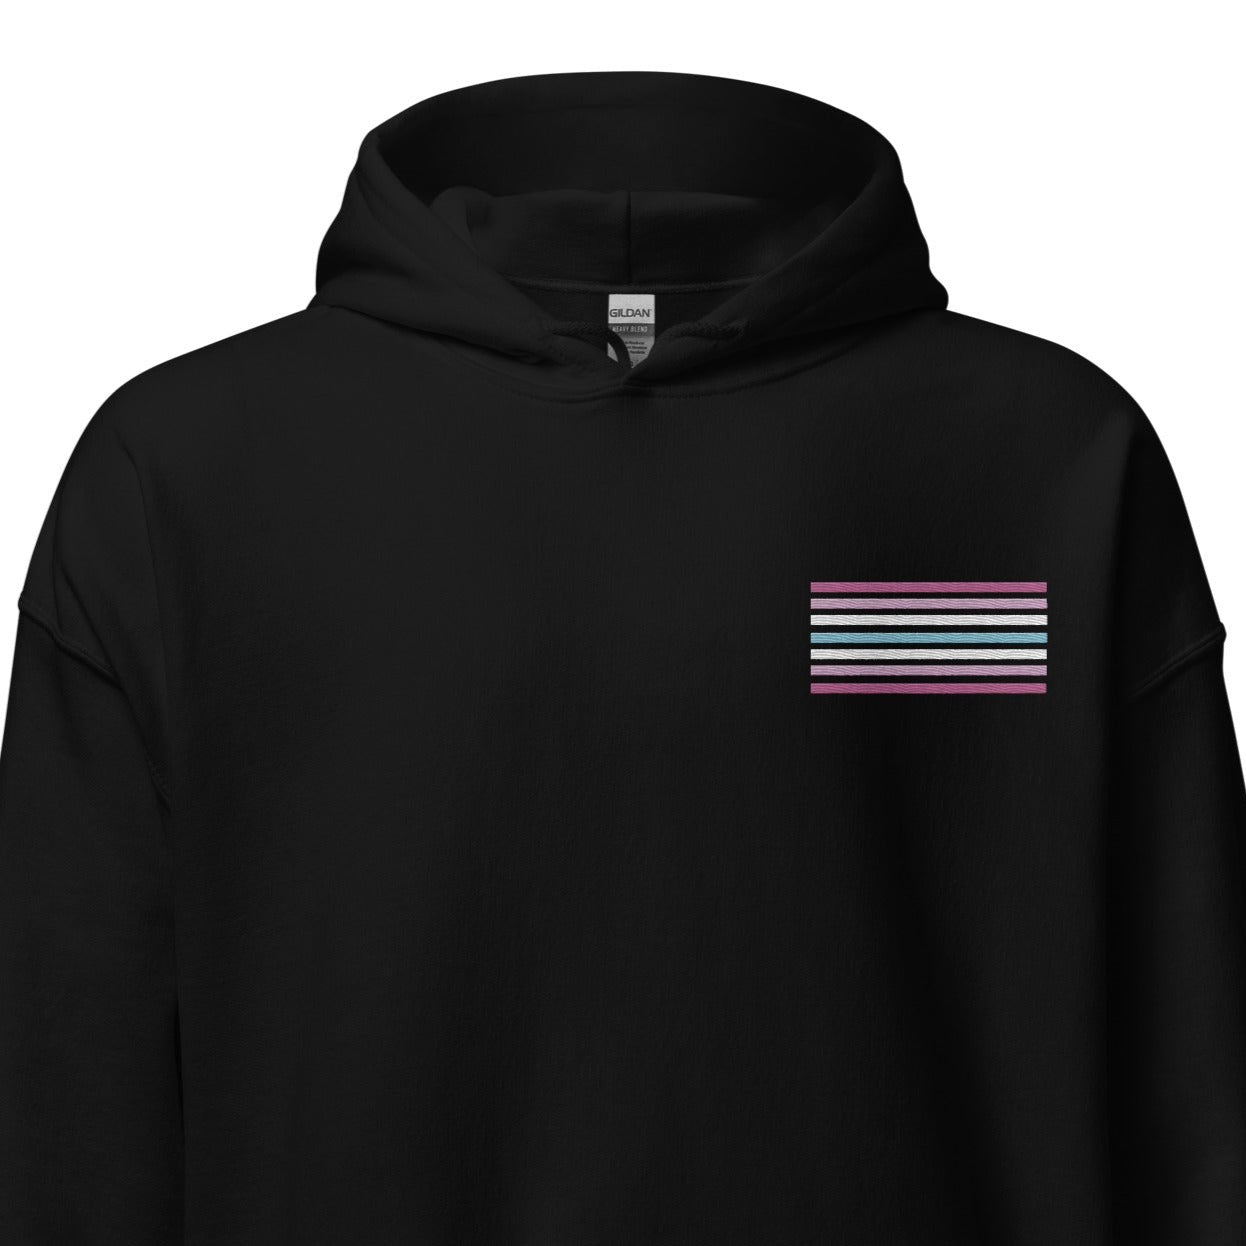 femboy hoodie, subtle femboi pride flag embroidered pocket design hooded sweatshirt, main